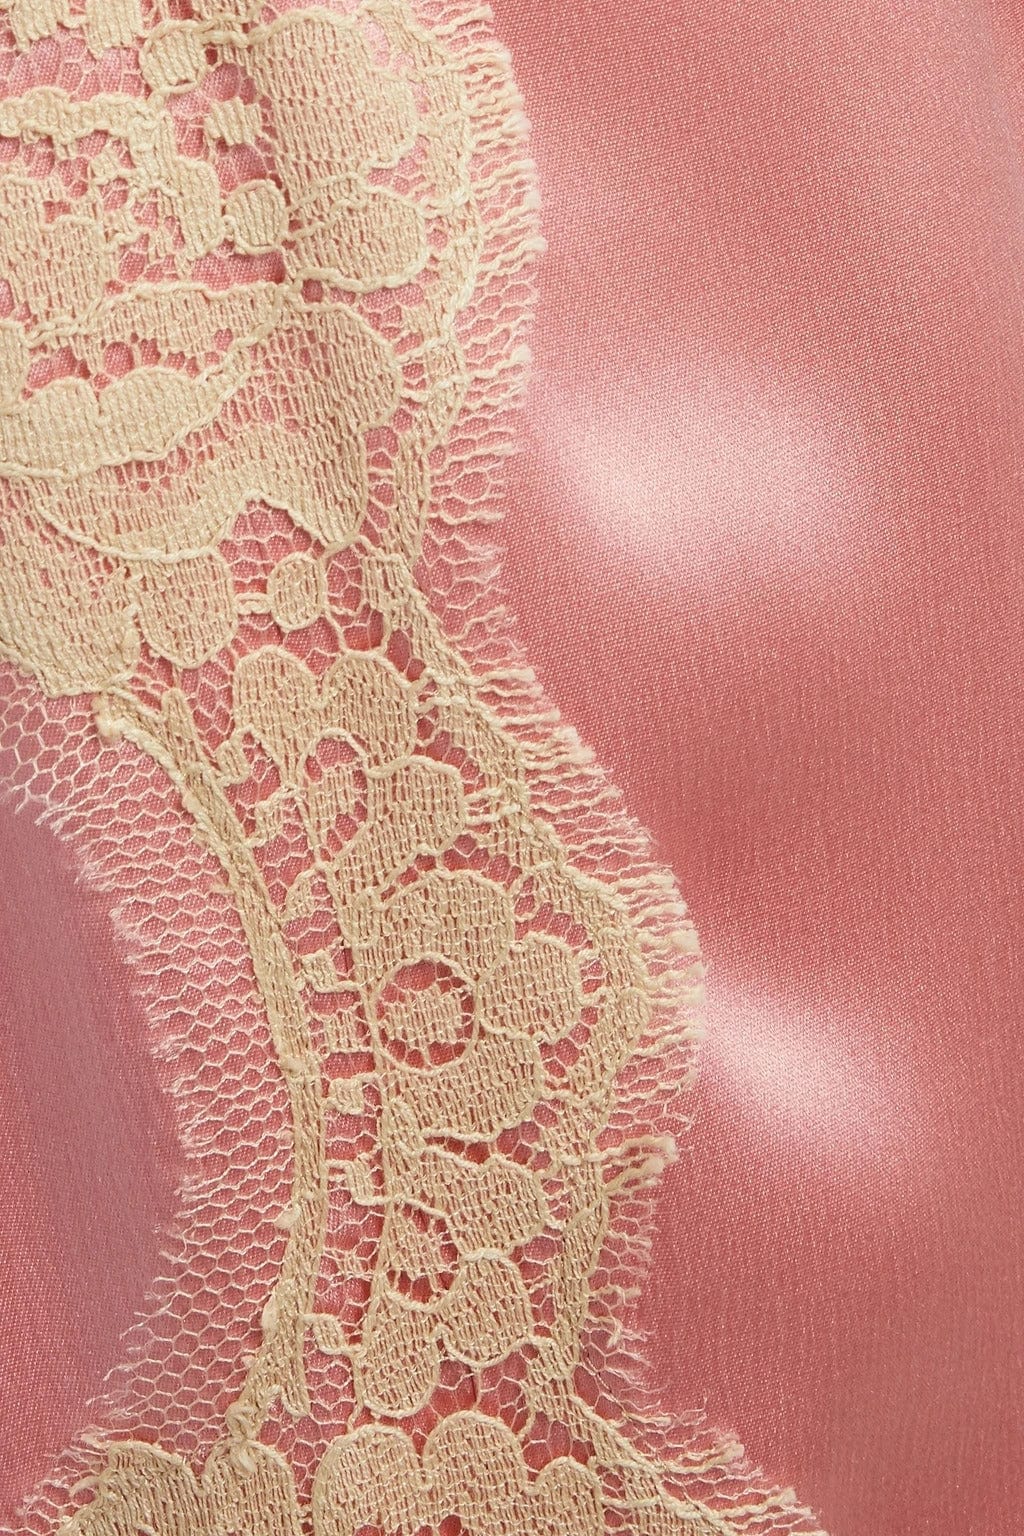 DOLCE & GABBANA Pants Pink Lace Trimmed Silk Satin Wide Legs IT38